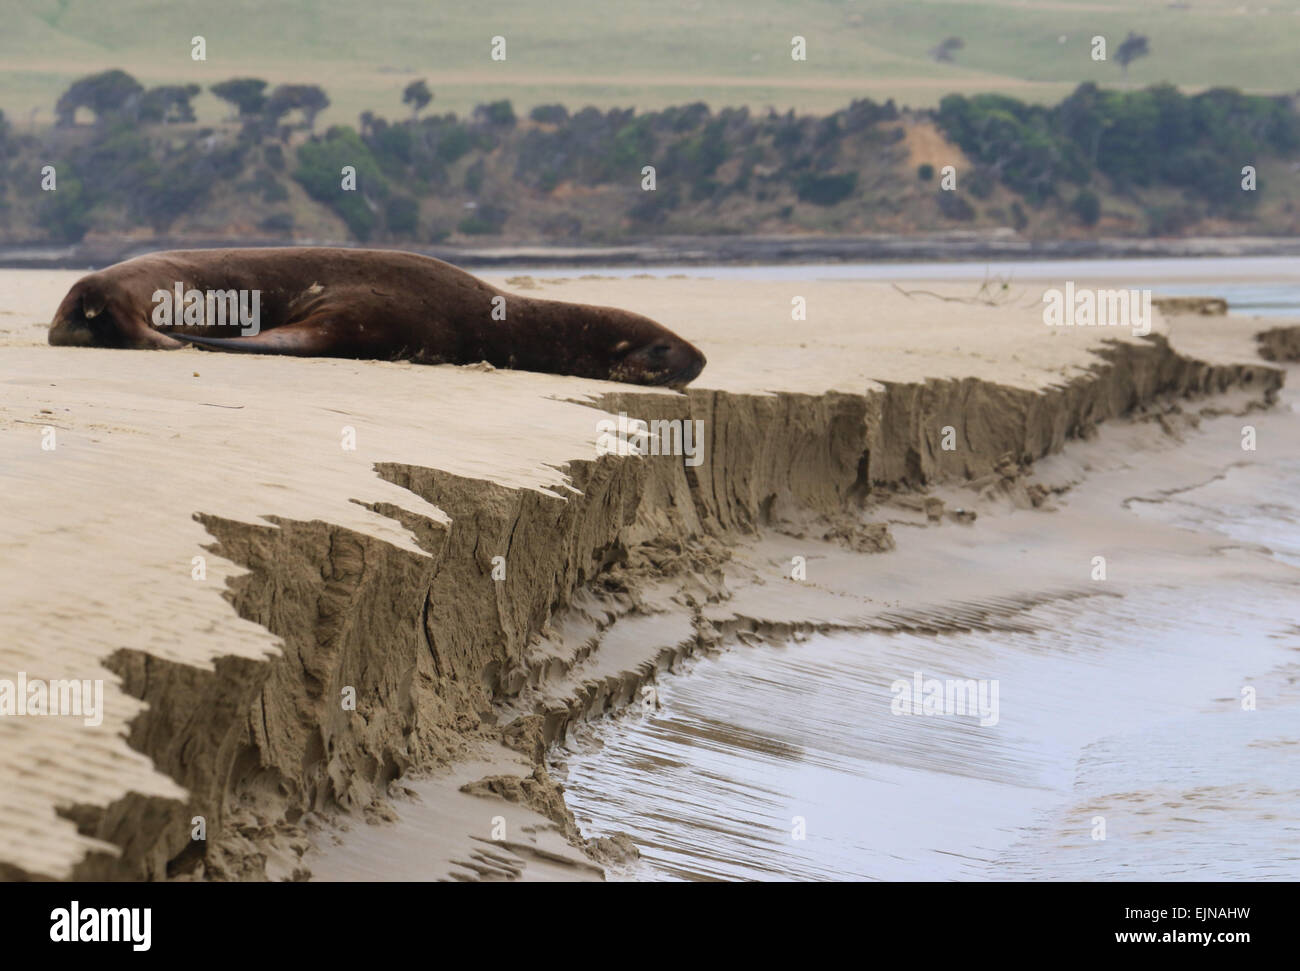 Nuova Zelanda Sea Lion, Hooker's sea lion su erodendo la spiaggia di sabbia, Saurat Bay Nuova Zelanda Foto Stock